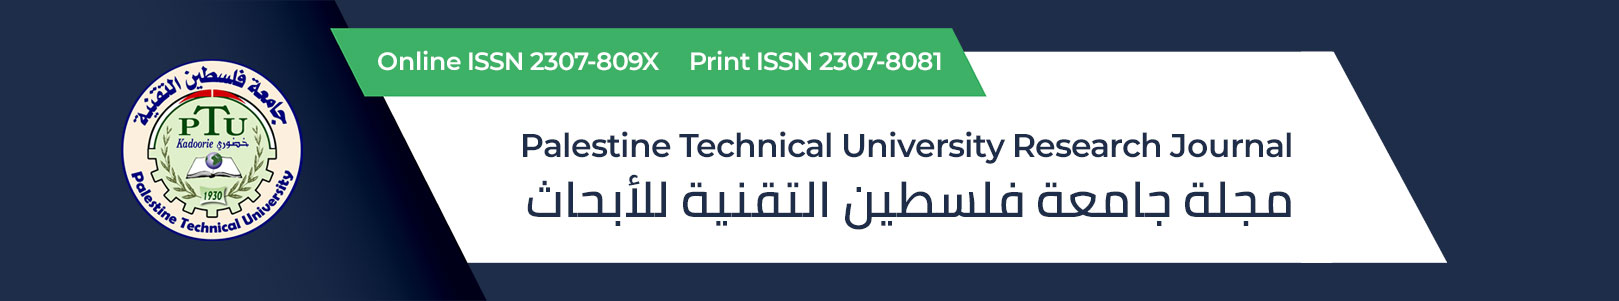 Palestine Technical University Research Journal